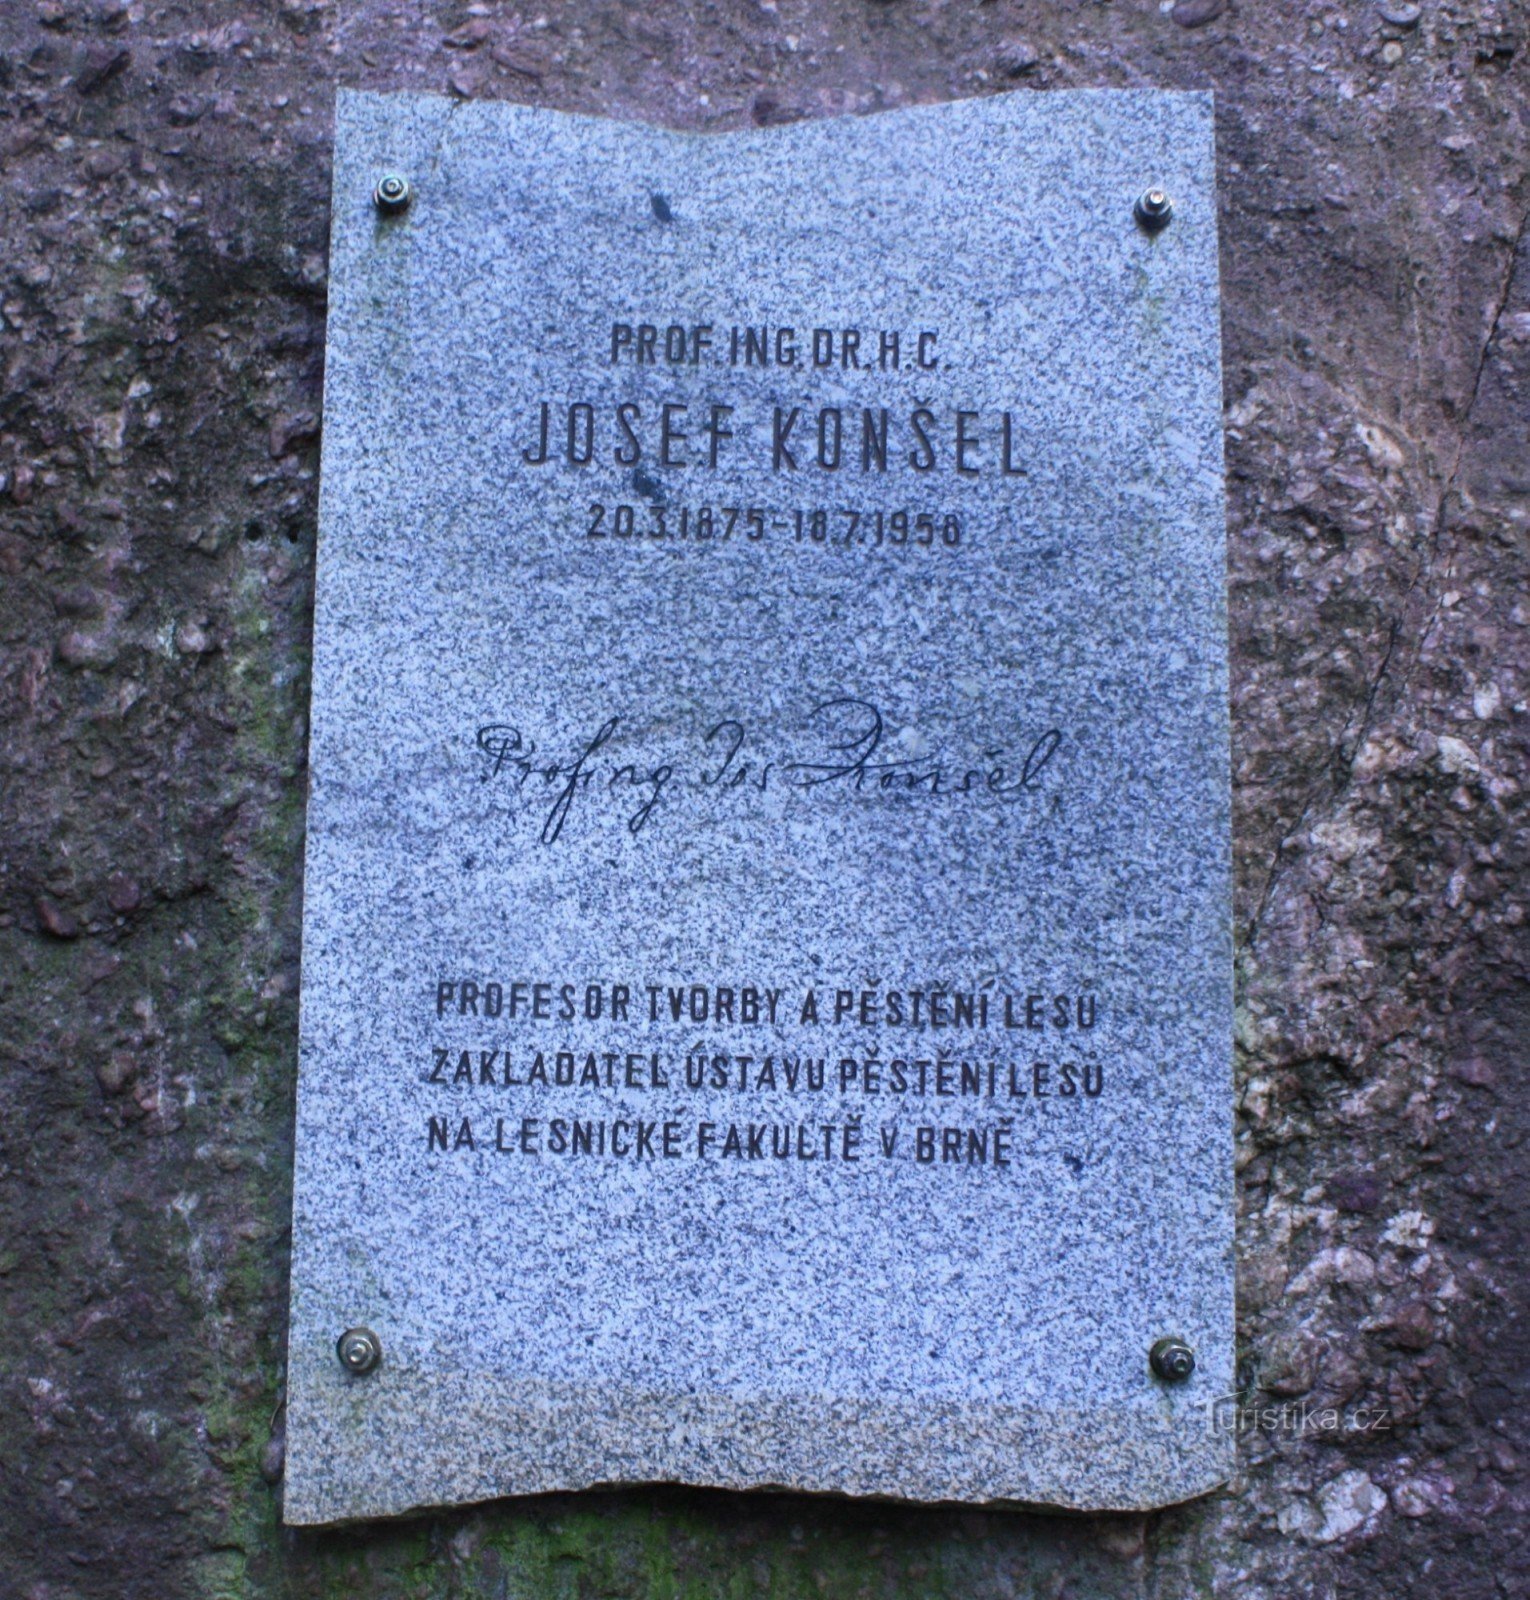 Spomenik Josefu Konšelu